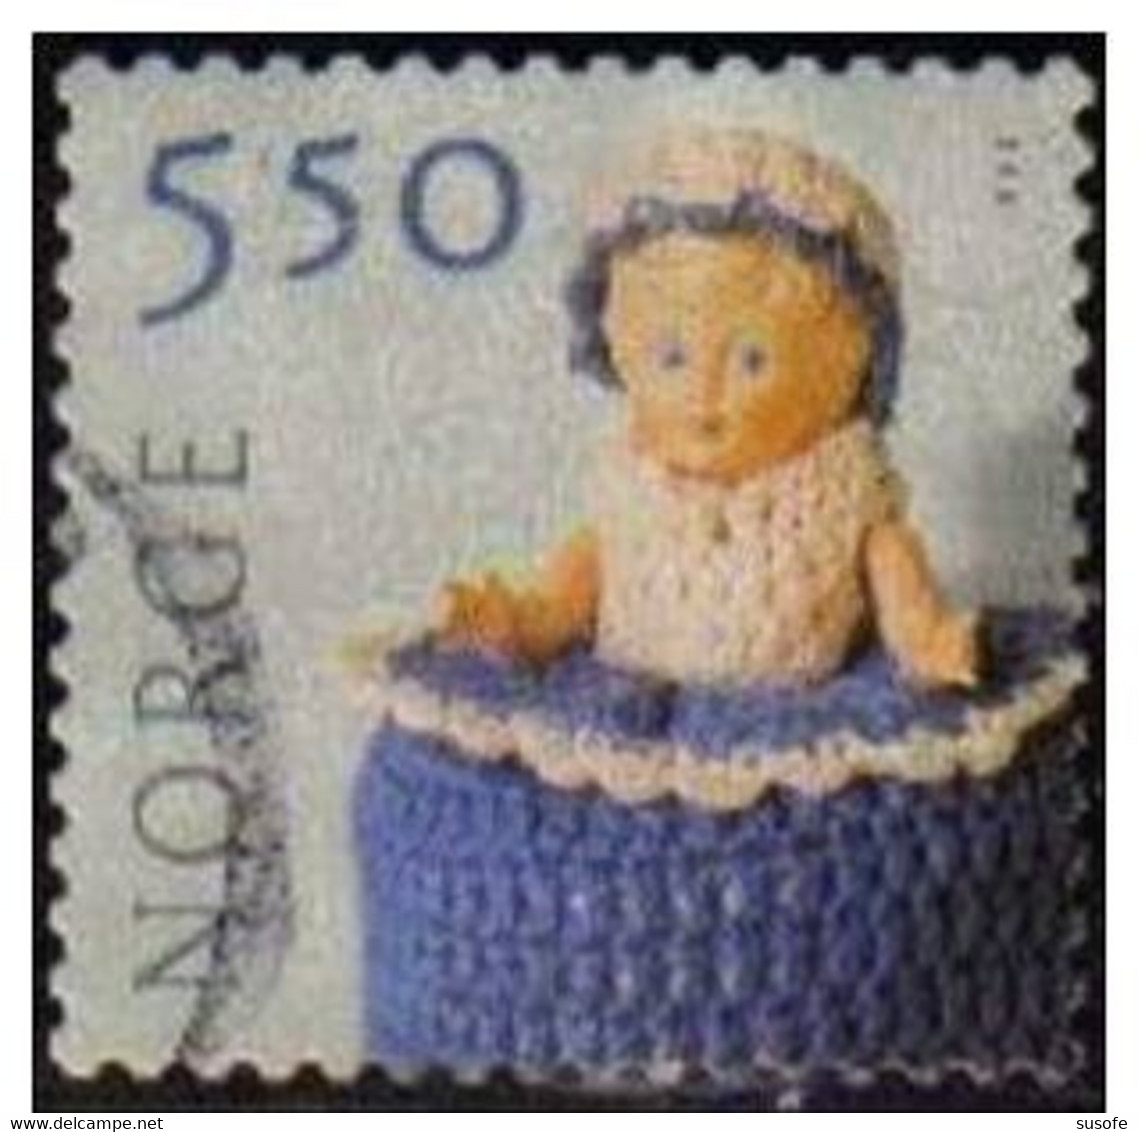 Noruega 2001 Scott 1306 Sello º Artesania Manual Textil Juguetes Michel 1390 Yvert 1339 Norway Stamps Timbre Norvège - Used Stamps